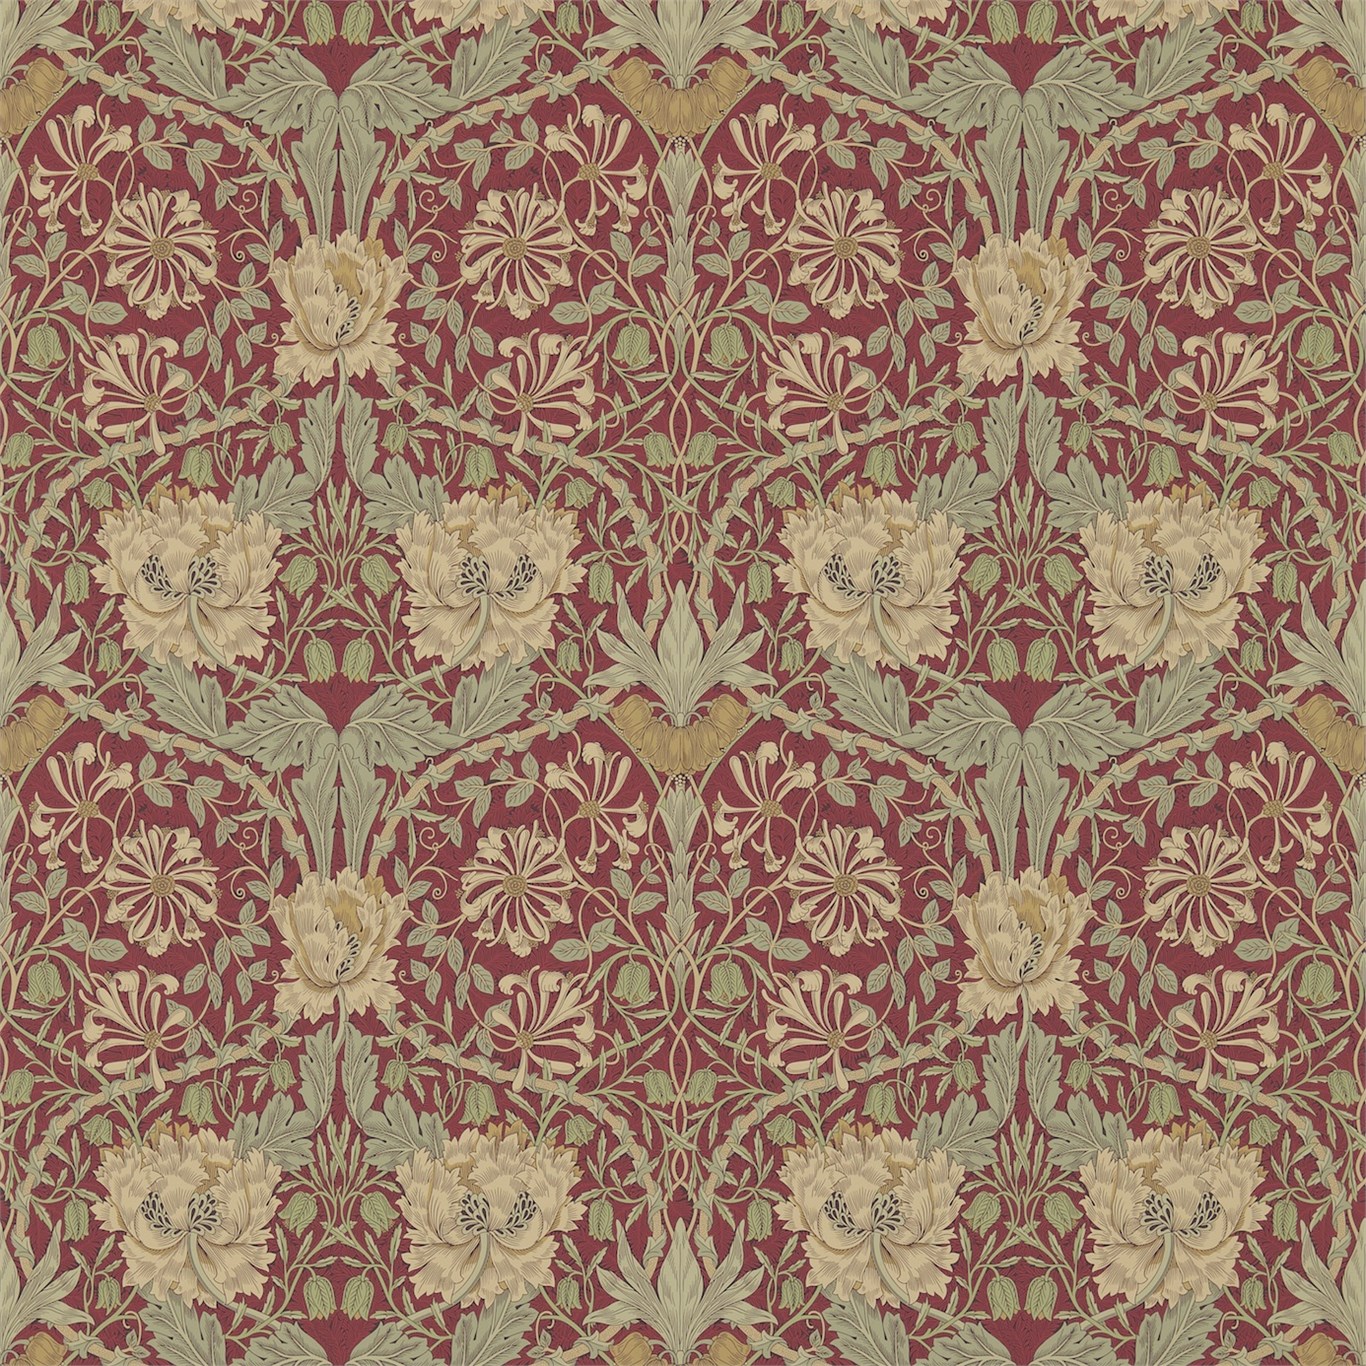 Honeysuckle and Tulip wallpaper design from Morris & Co.